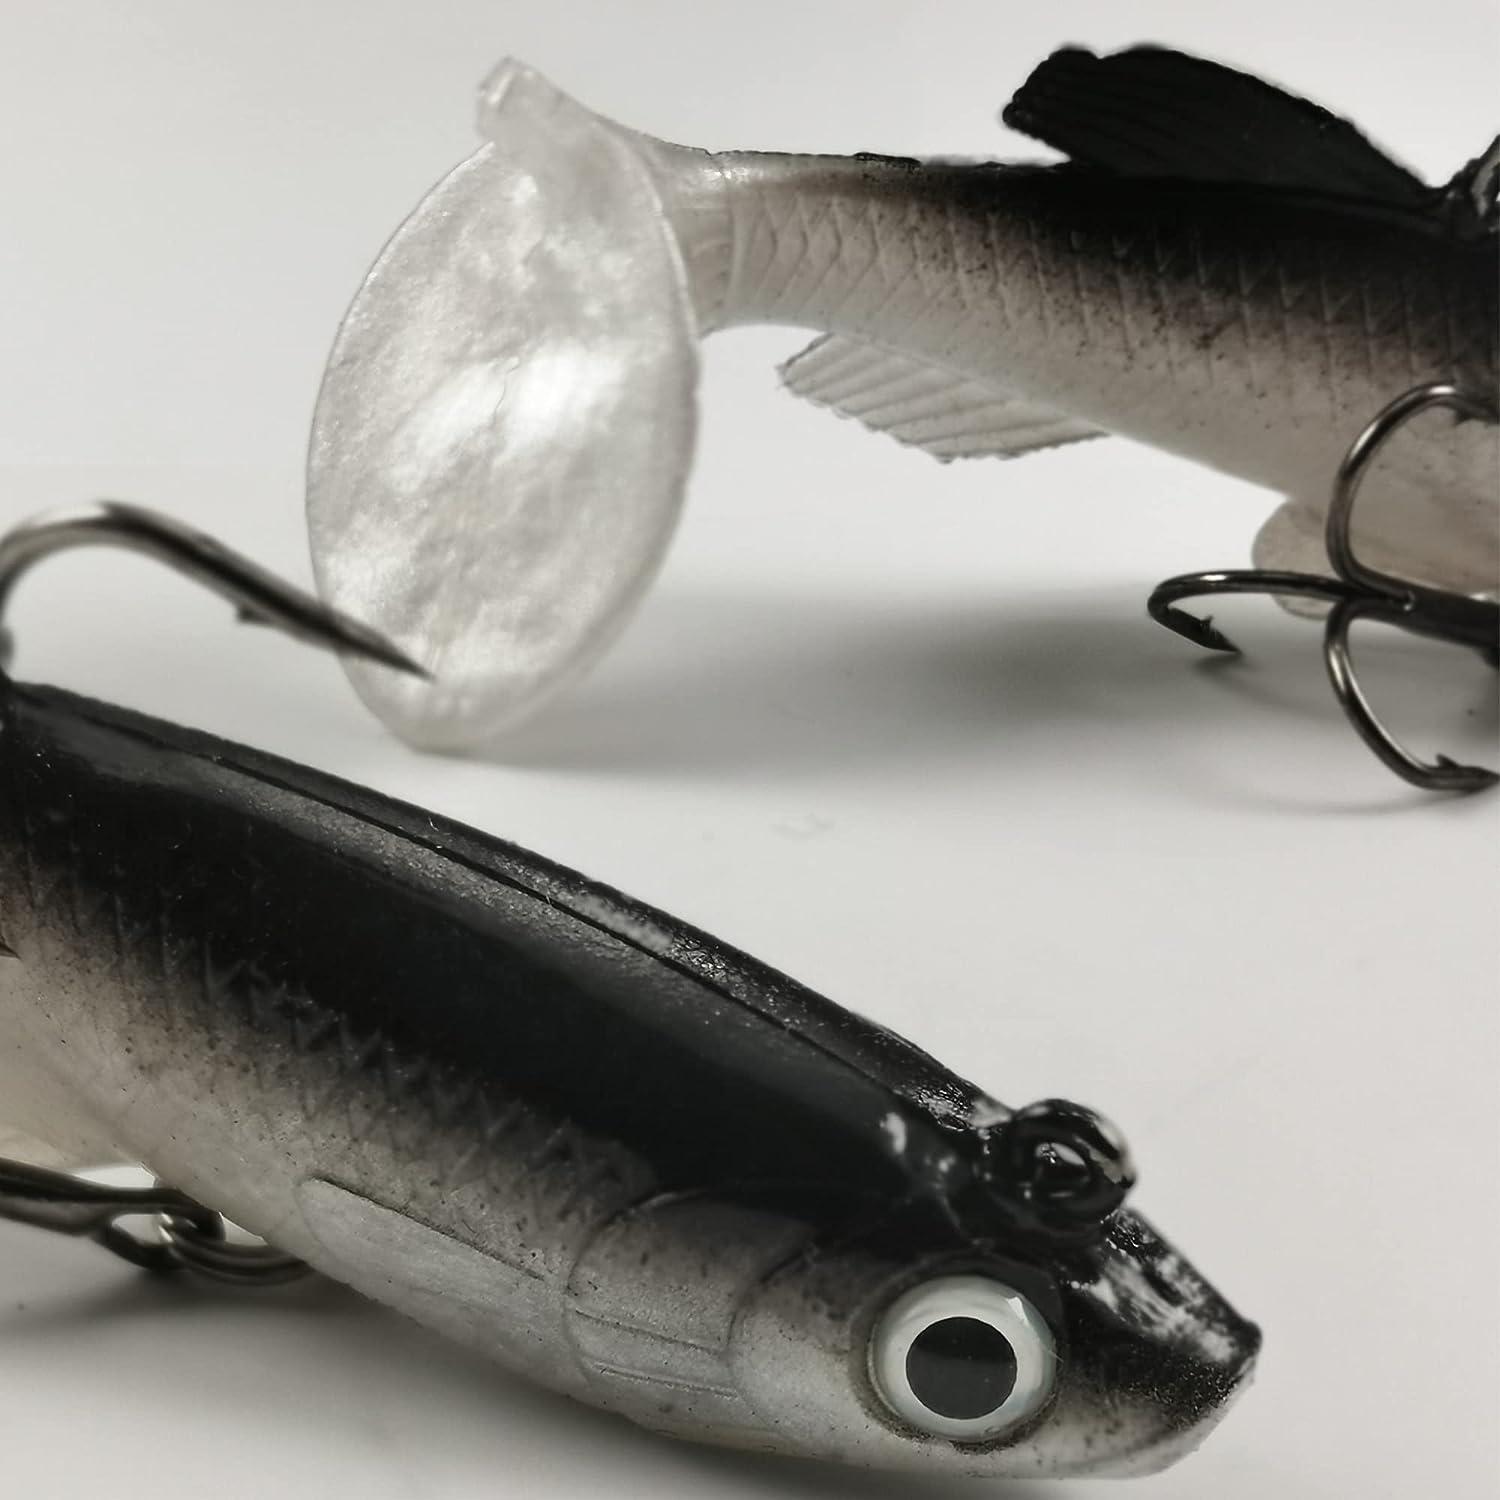 Maoww 3Pcs Lure Bait Fishing Soft Head Fish Bass Hook Artificial